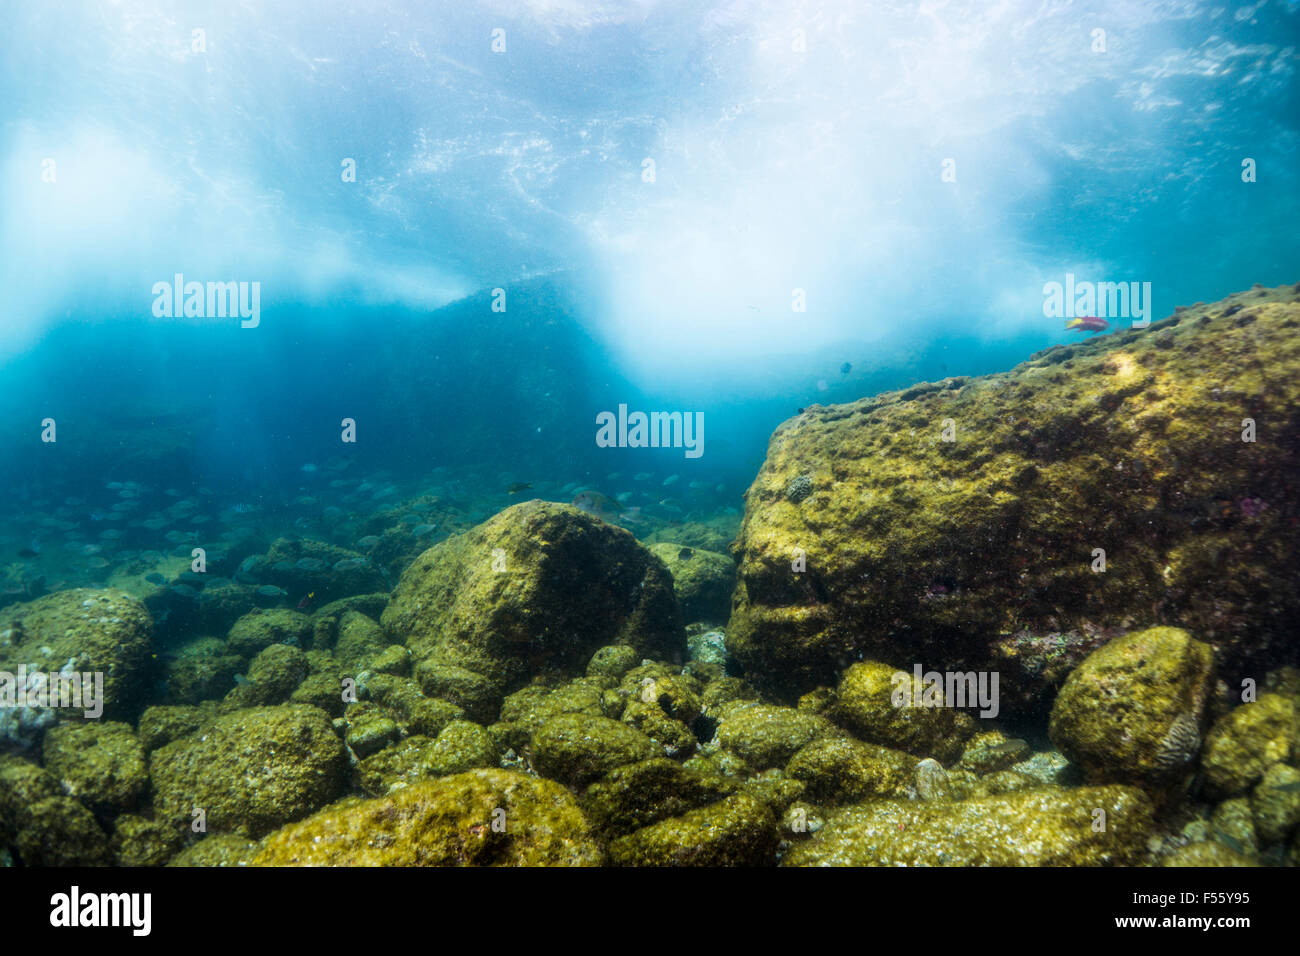 underwater reef scene at Alcatrazes islands, Shore of Sao Paulo state, Brazil Stock Photo